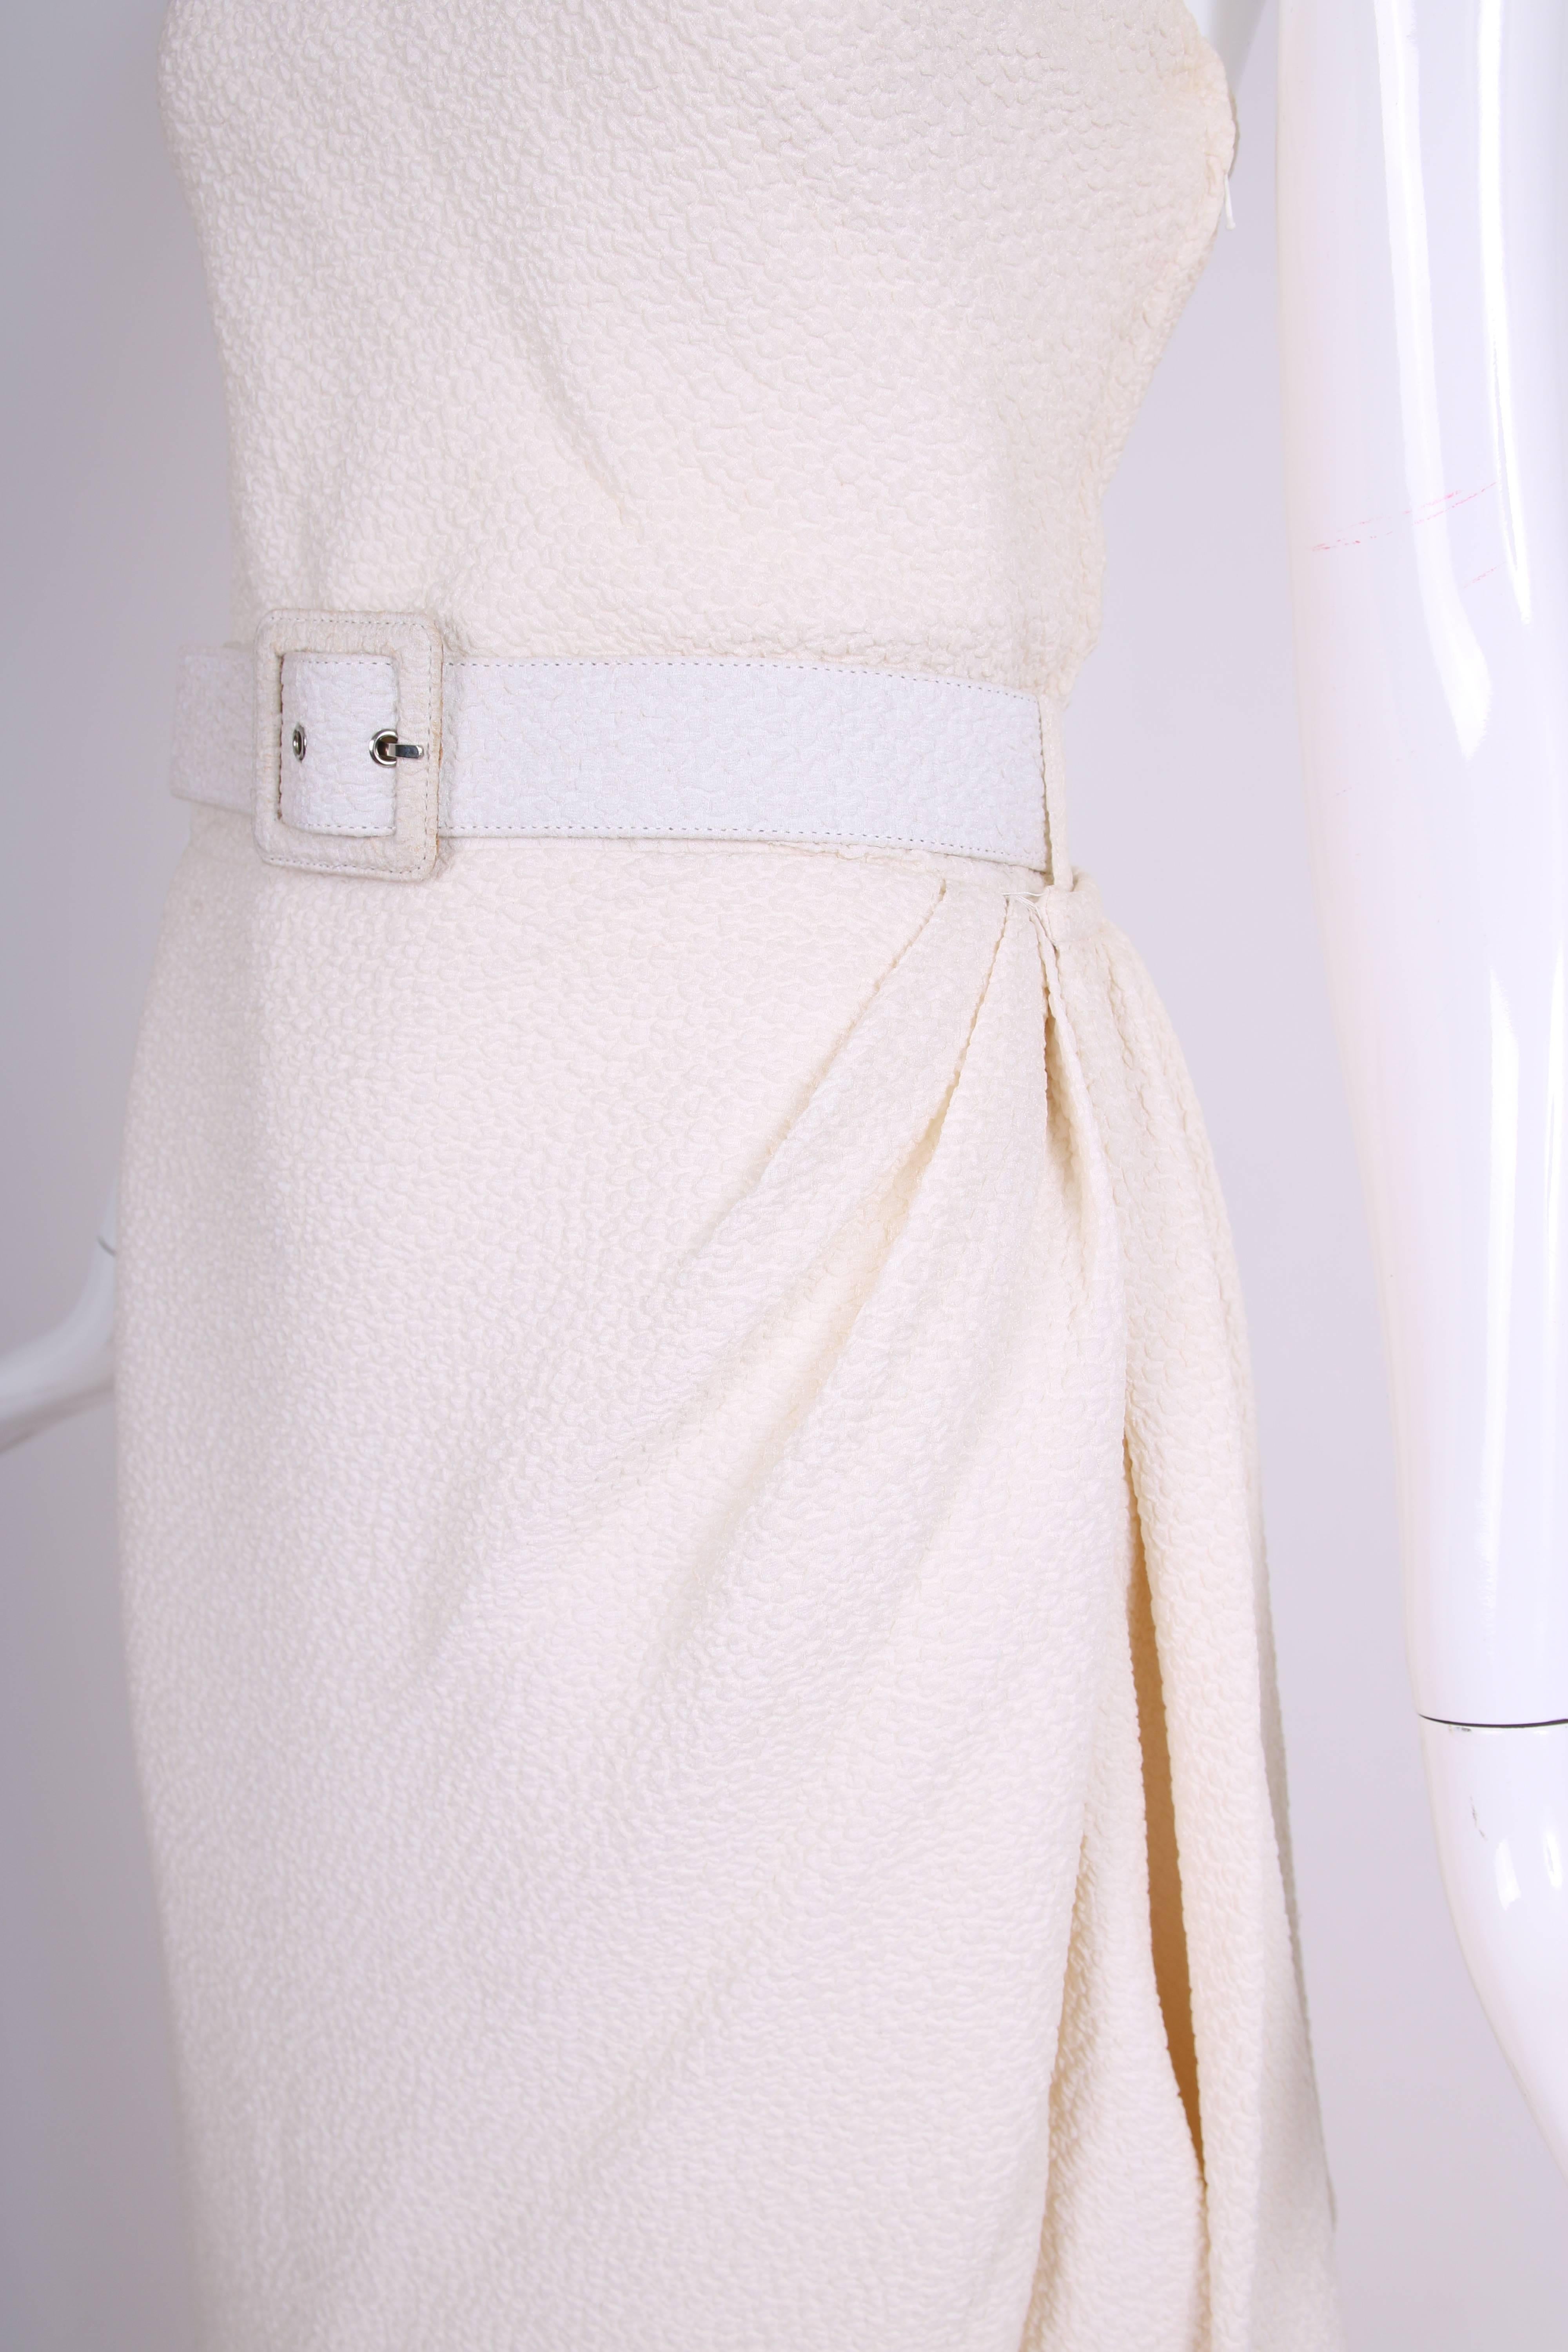 Yves Saint Laurent Ivory Single Shoulder Evening Gown w/Thigh-High Slit & Belt 2